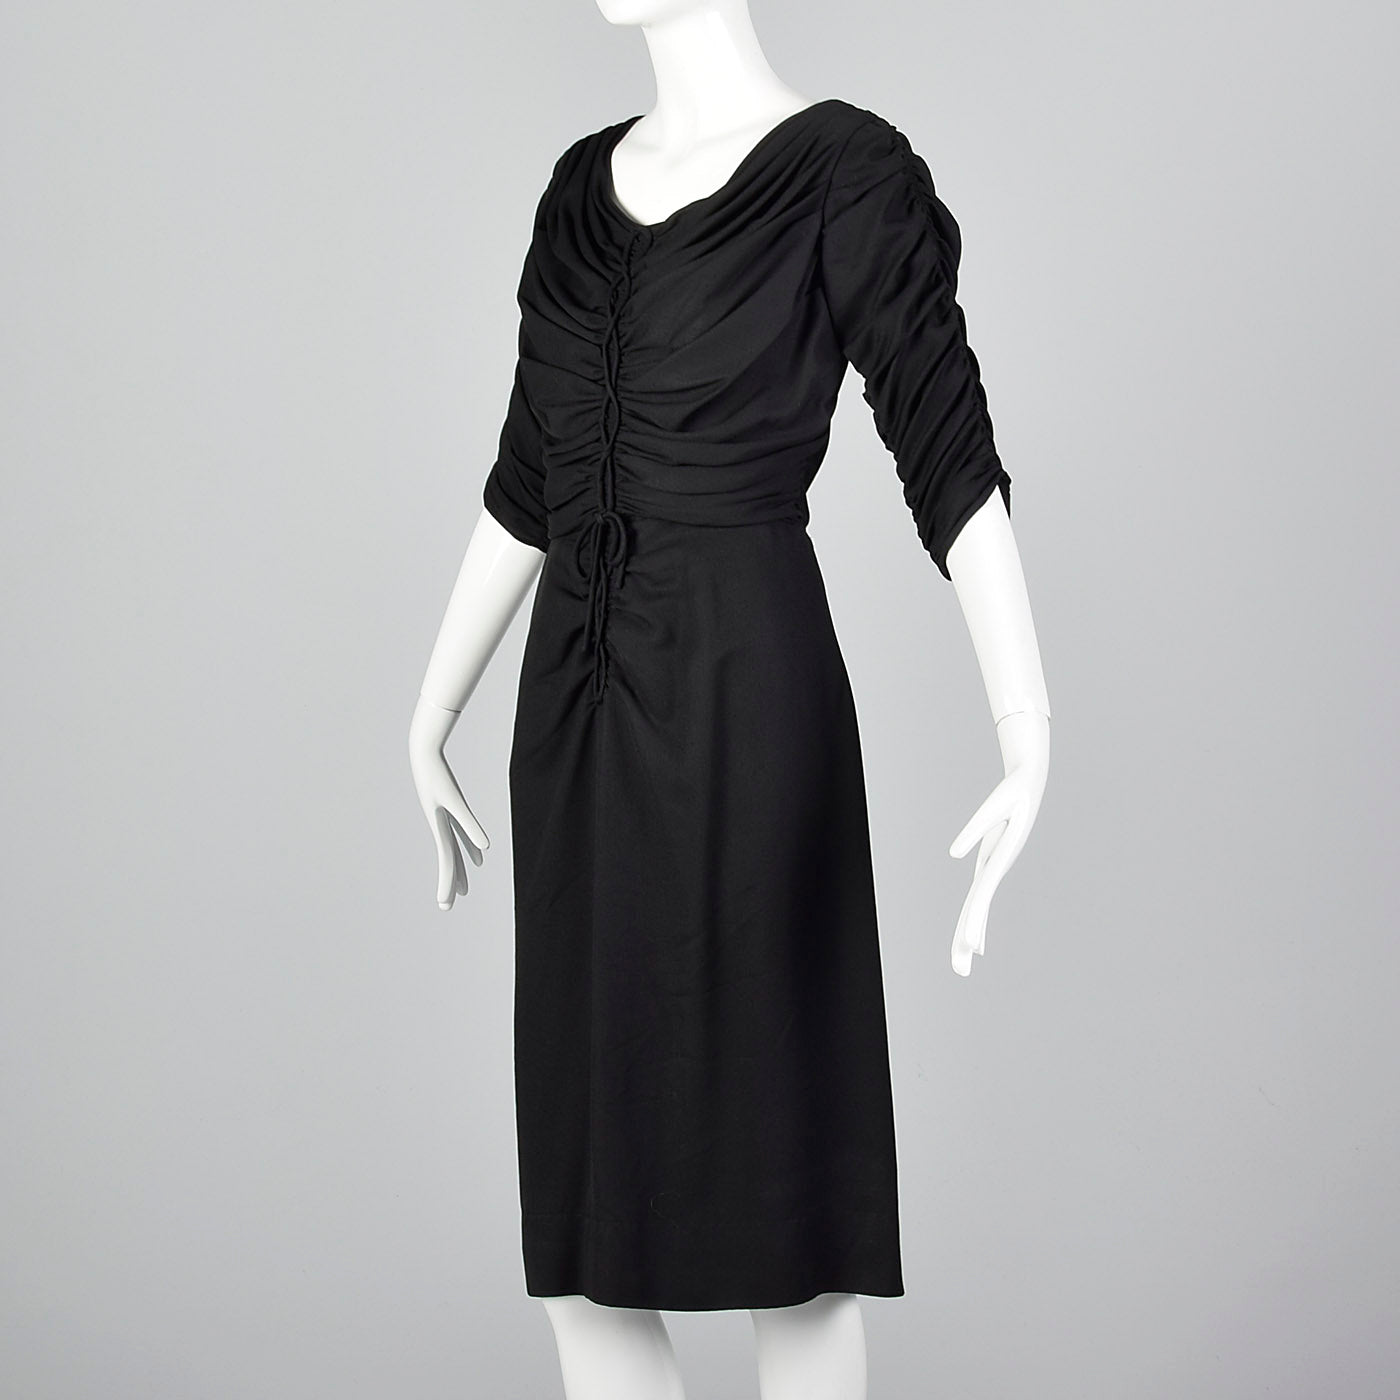 1950s Black Rayon Dress with Gathered Bodice